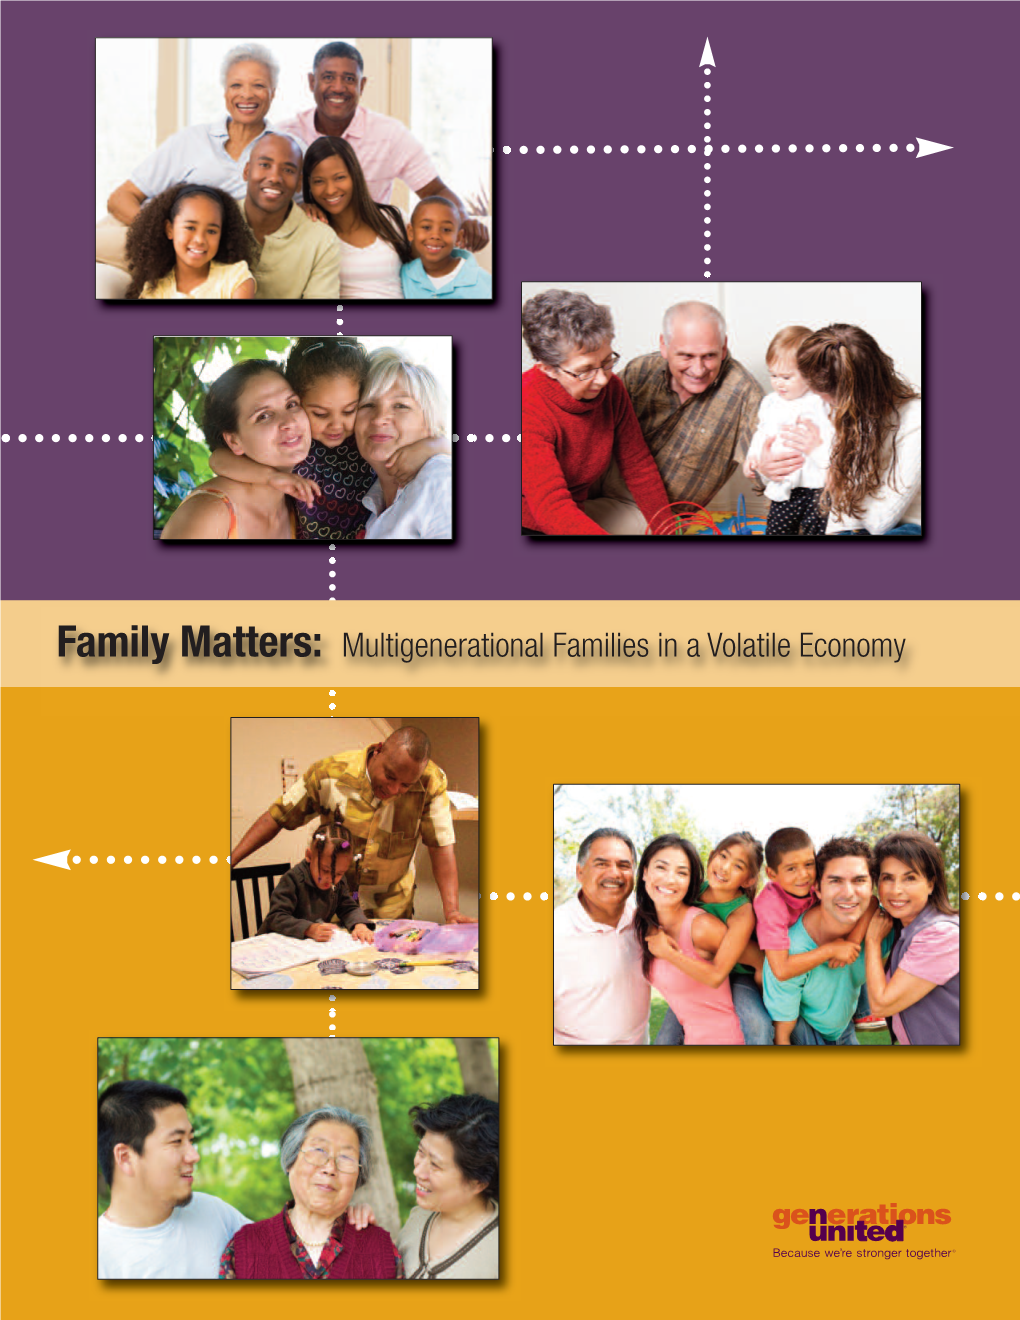 Multigenerational Families in a Volatile Economy Family Matters: Multigenerational Families in a Volatile Economy a C K N O W L E D G E M E N T S